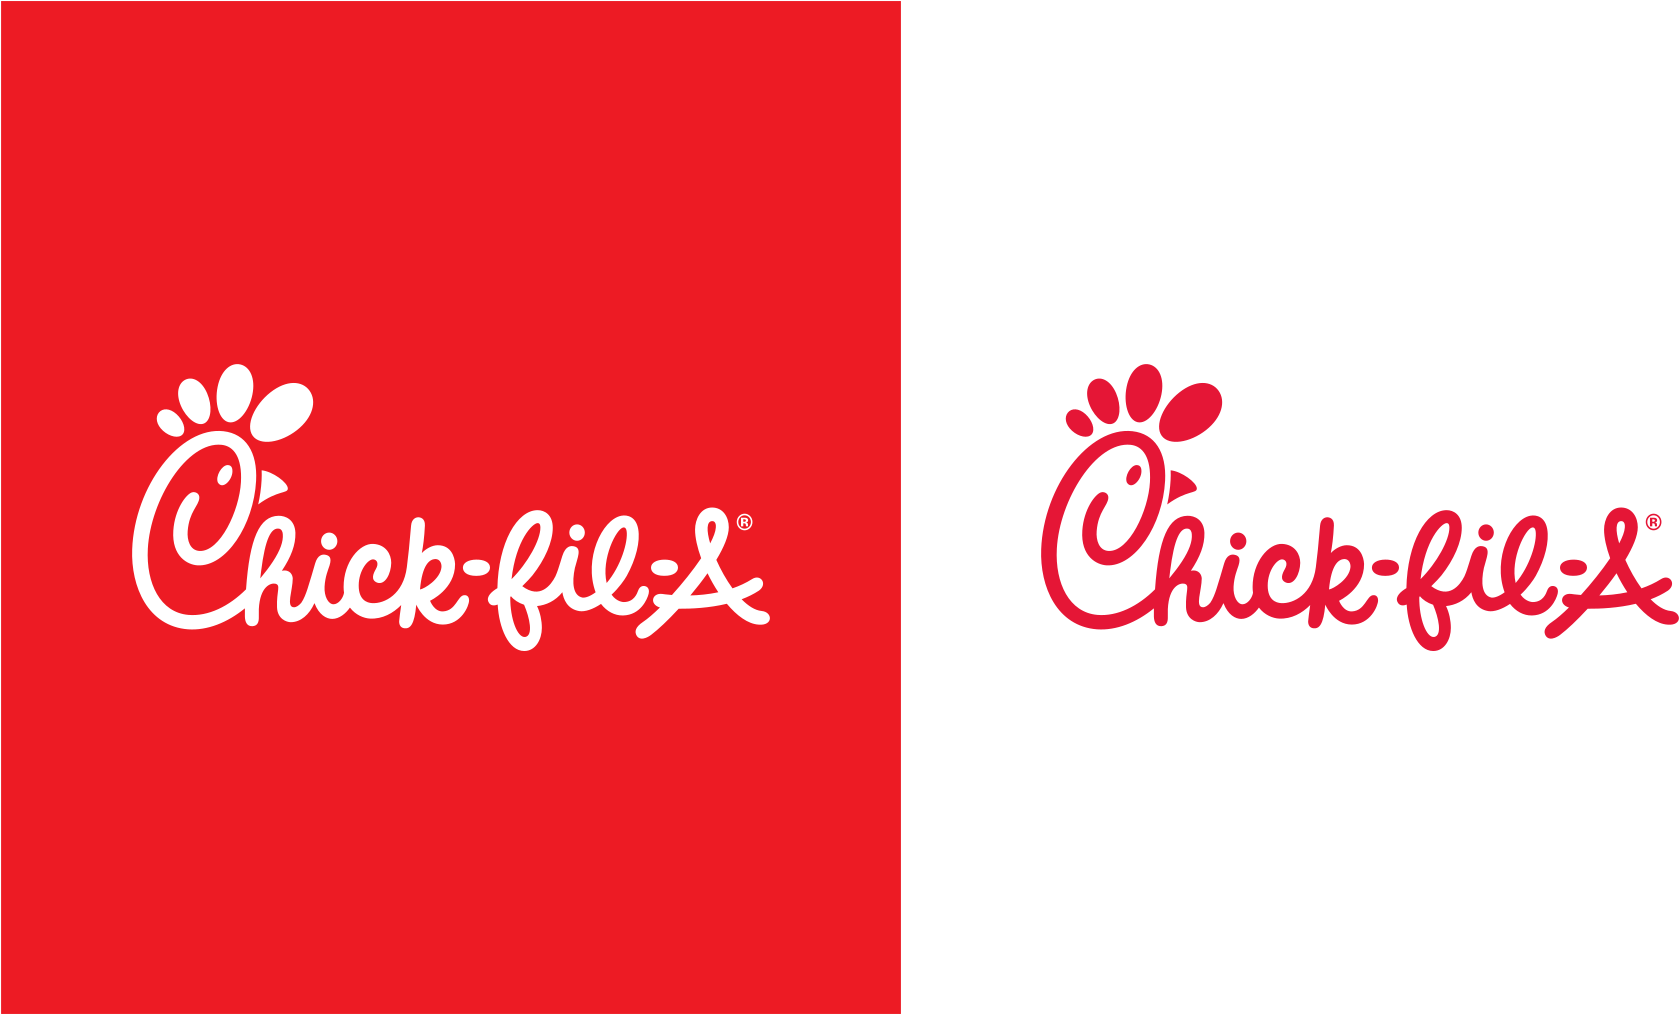 chick fil a logo vector